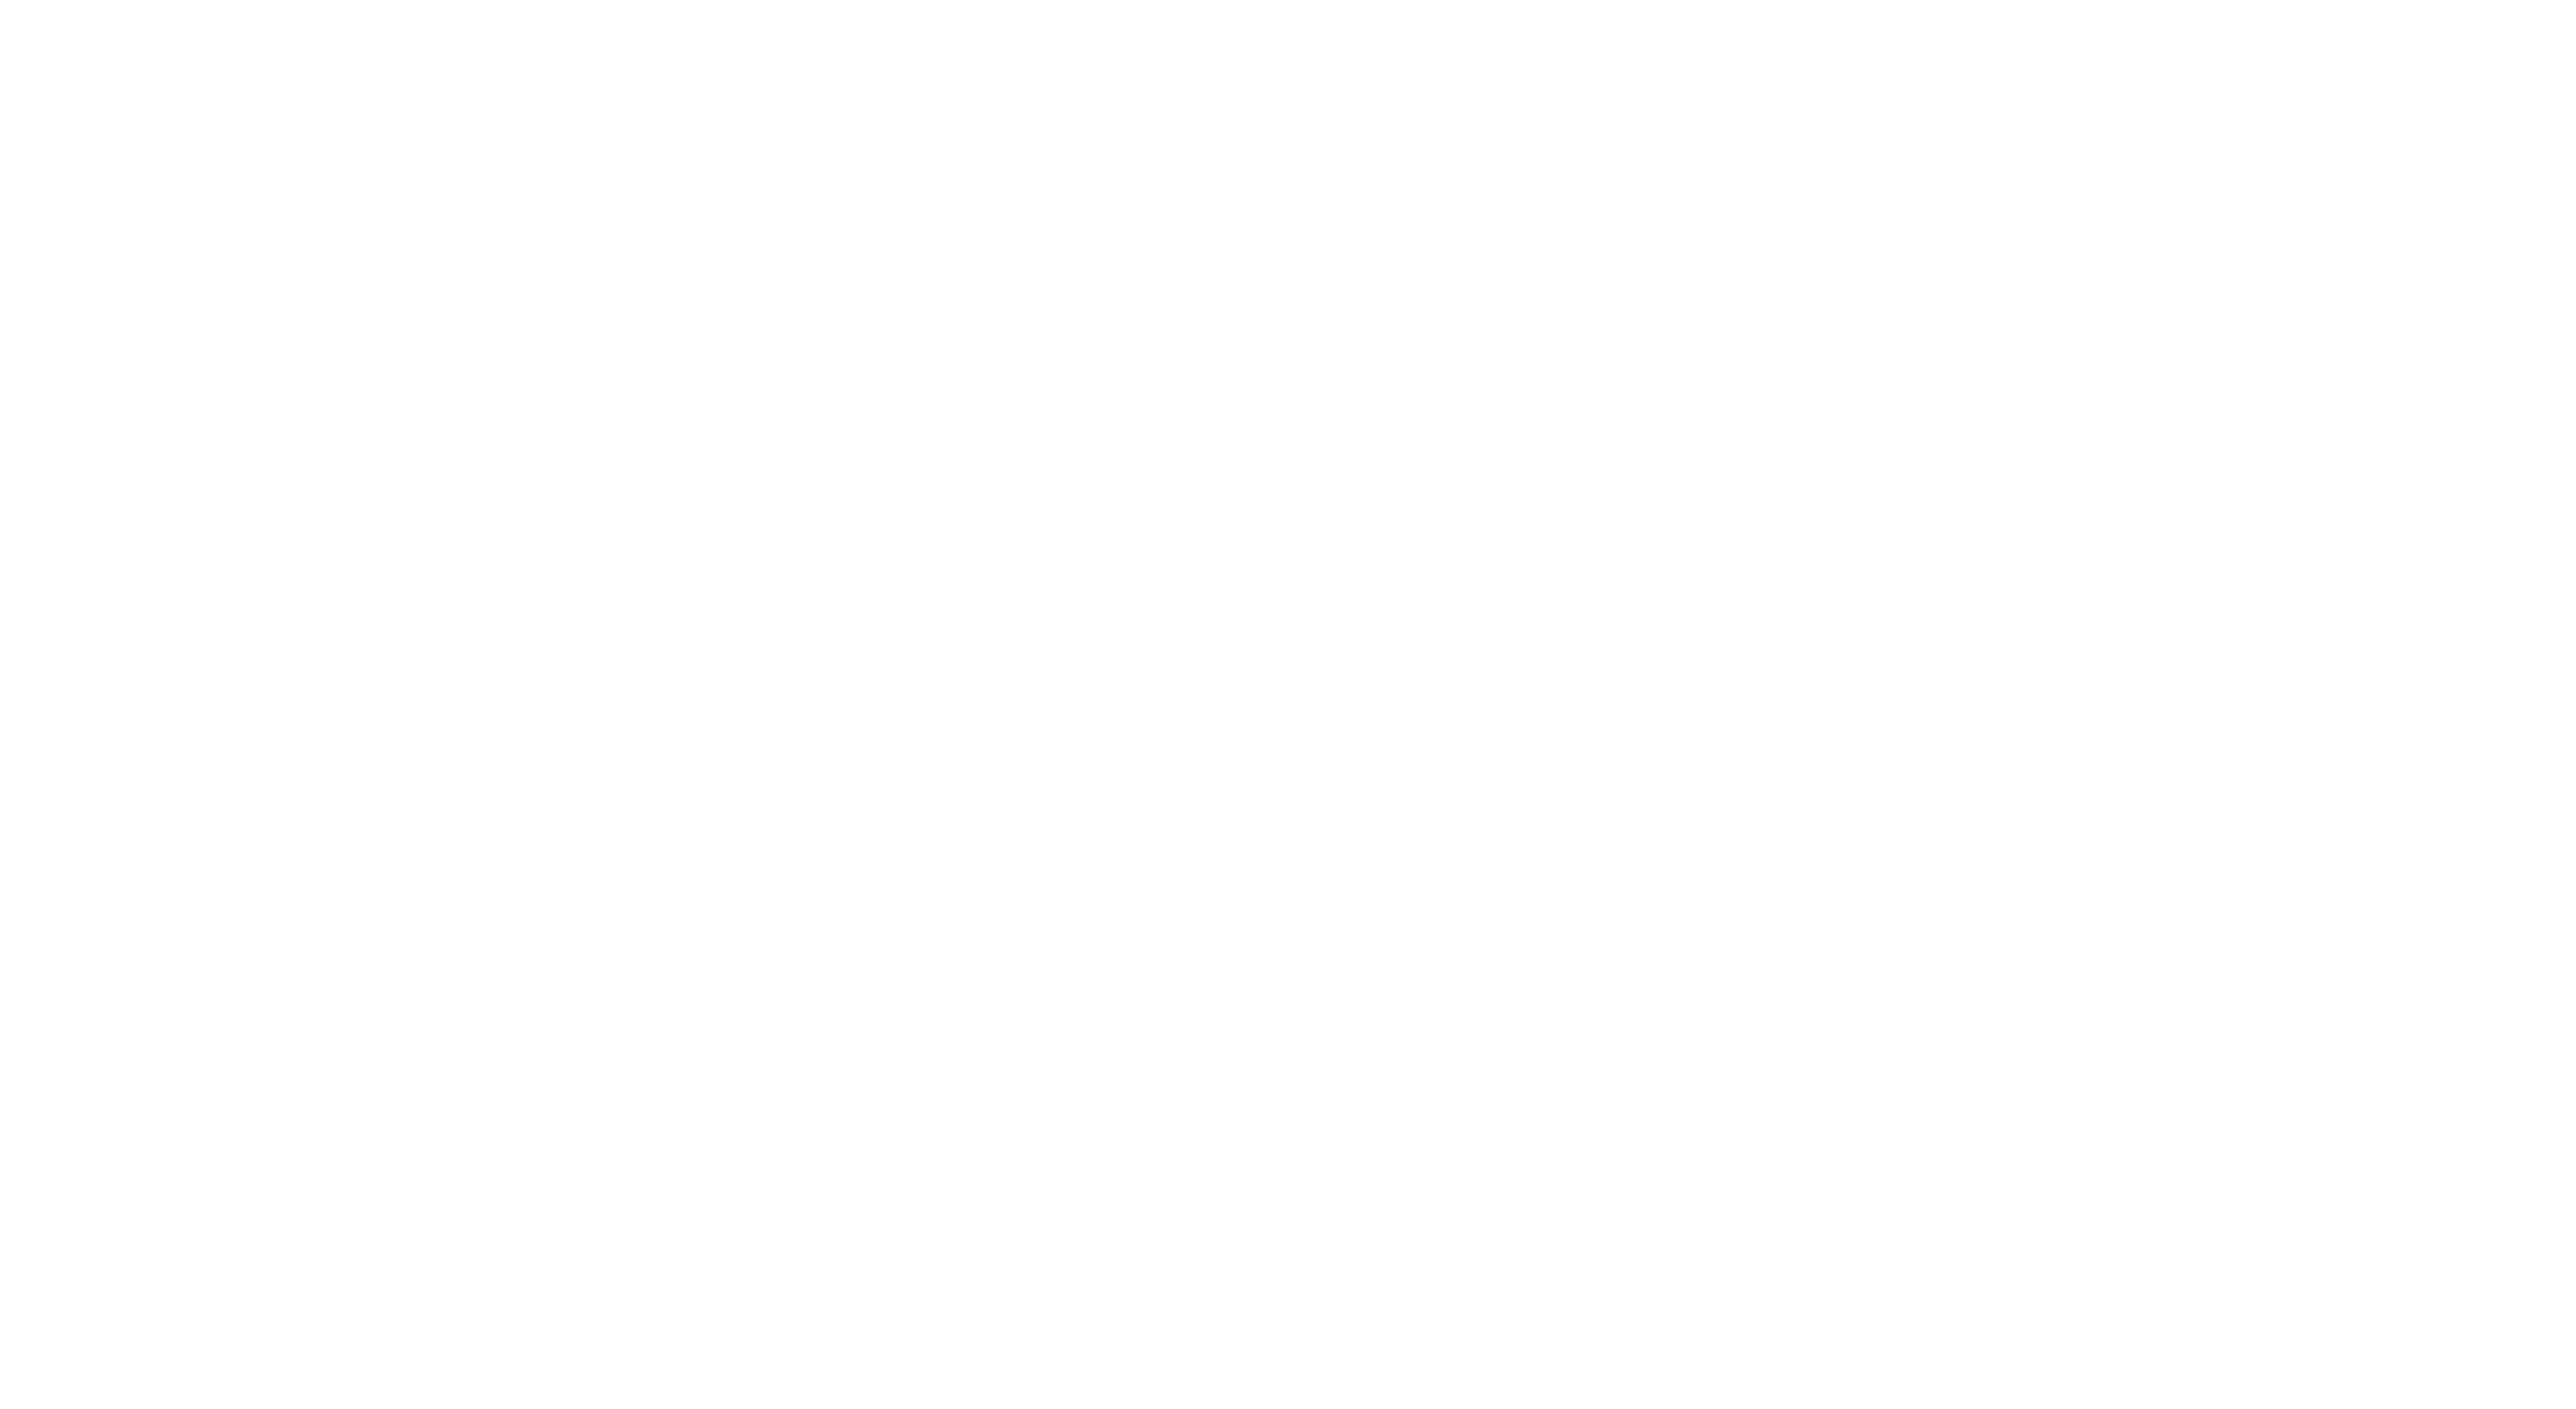 white RAK Brewing Co. logo